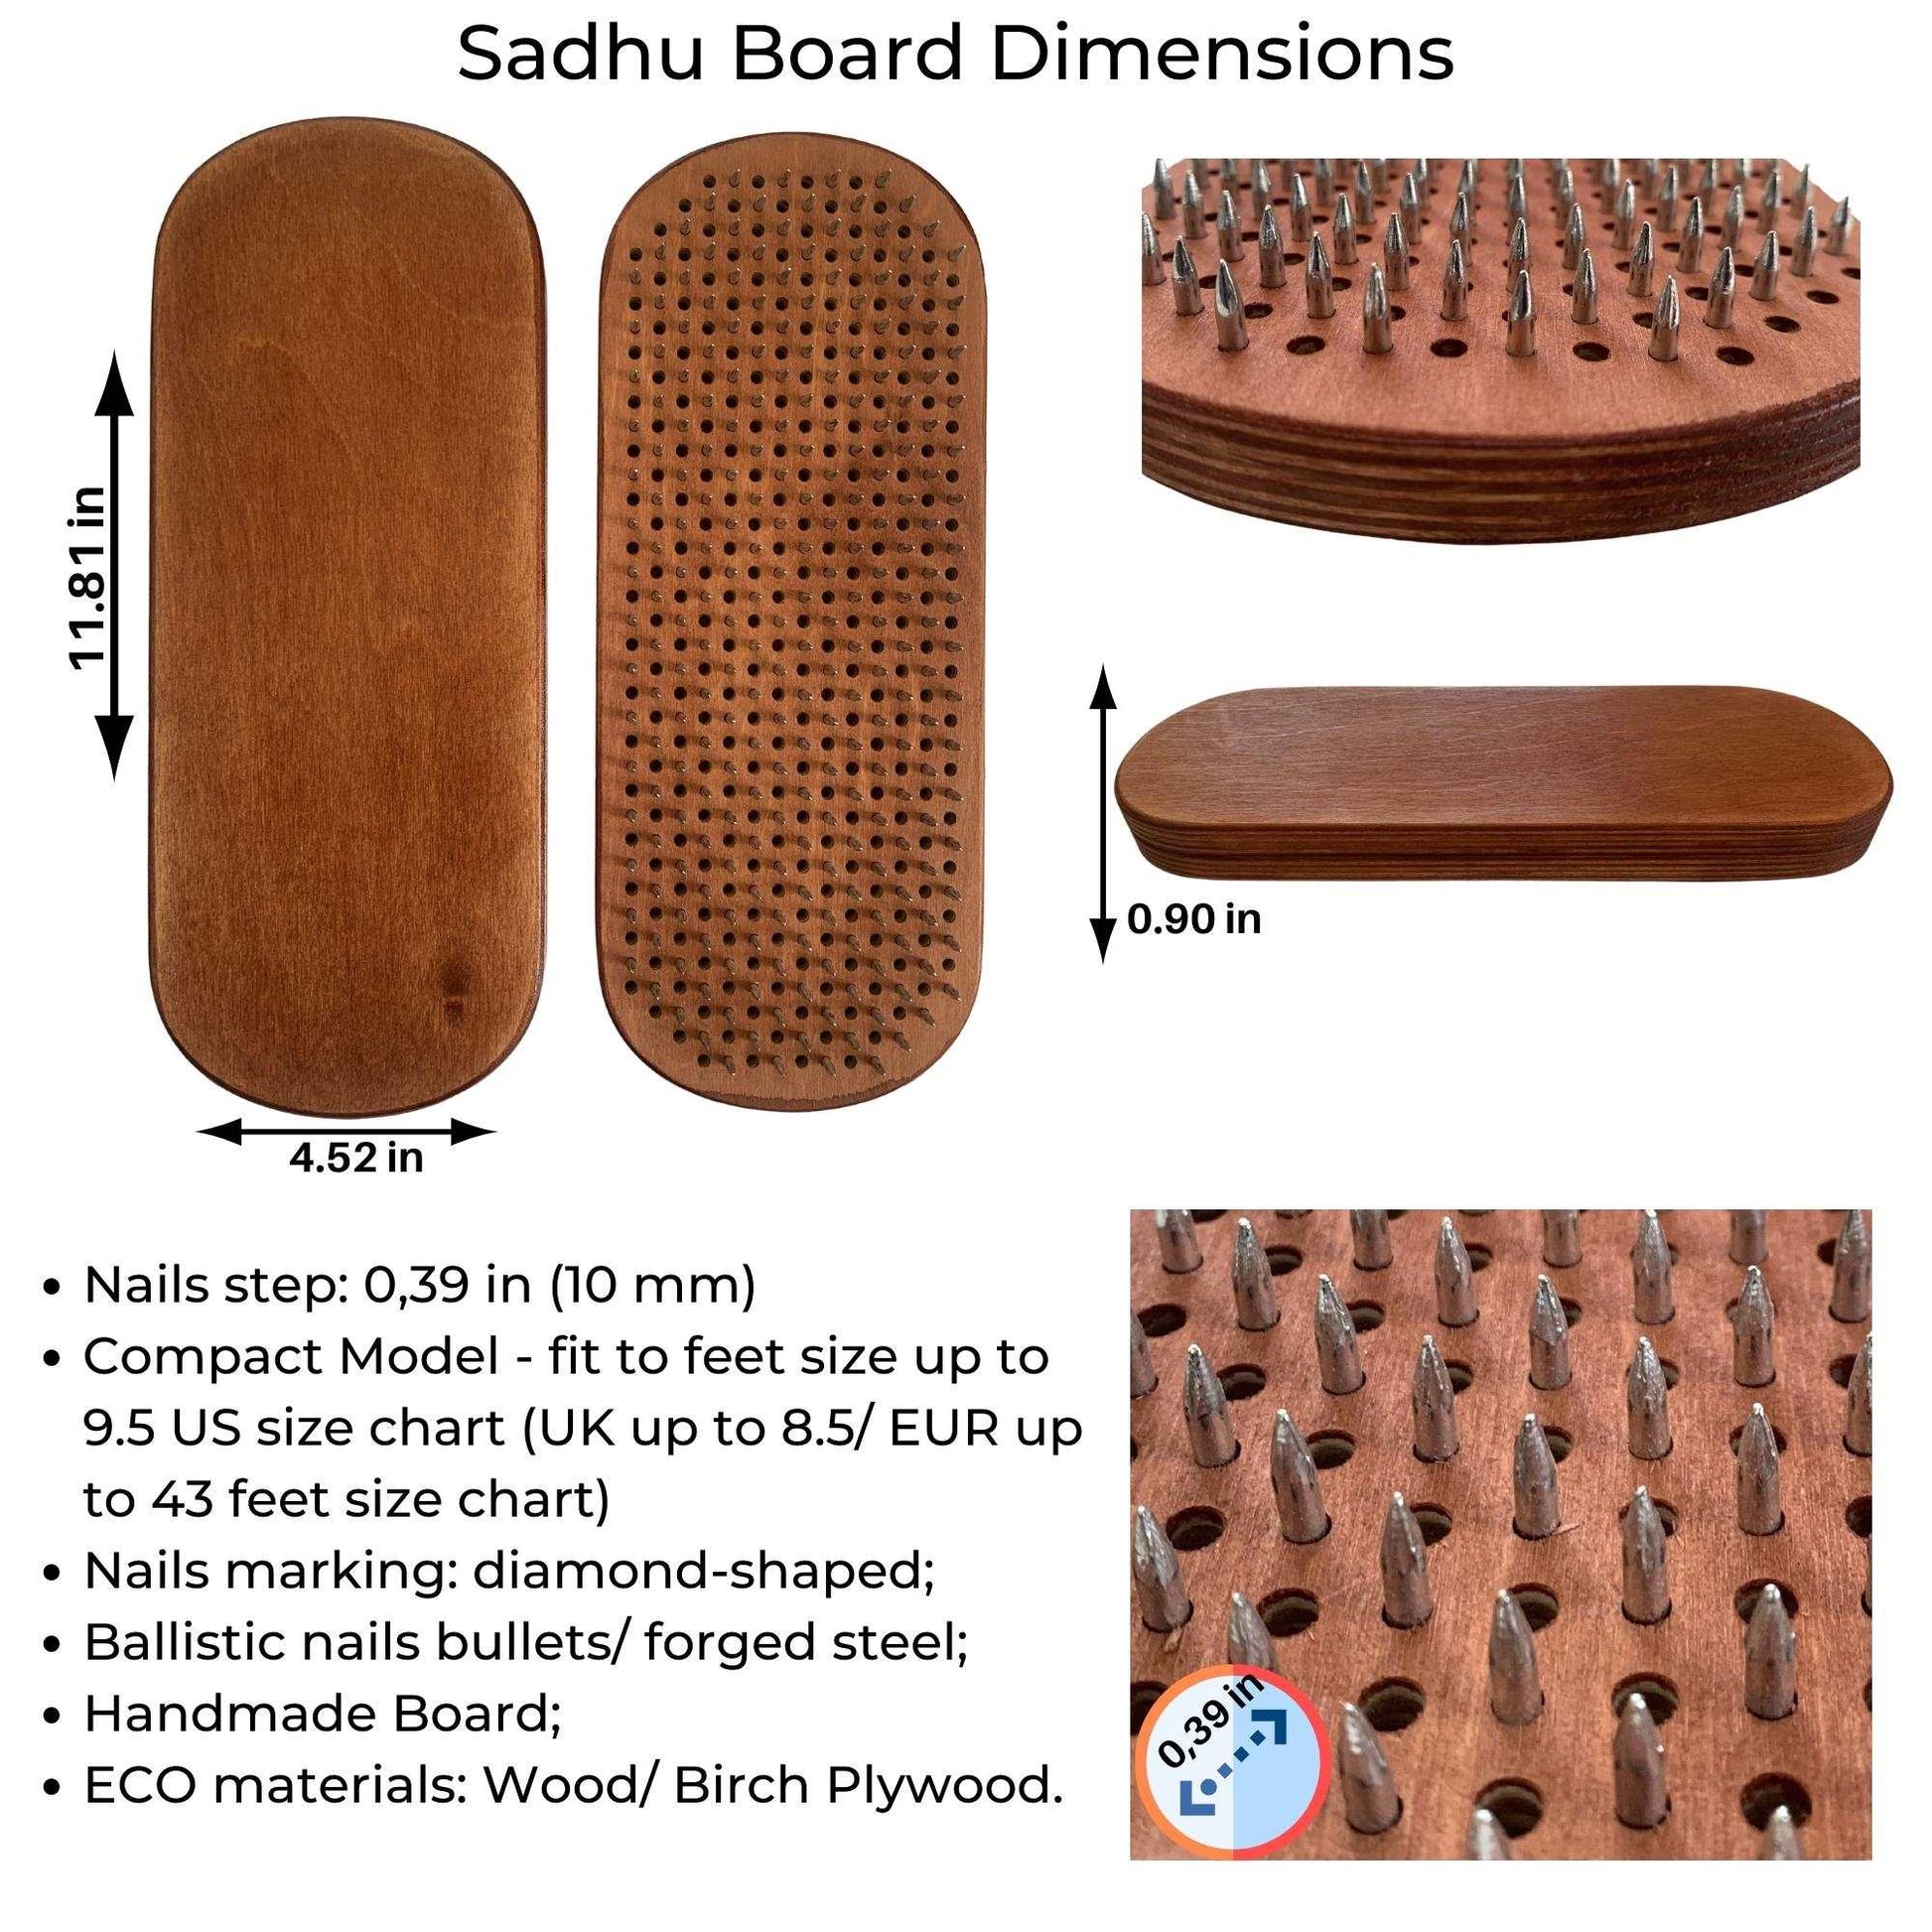 Sadhu Board, Yoga Board, Nails Board, Yoga Gifts, Relaxation, Free